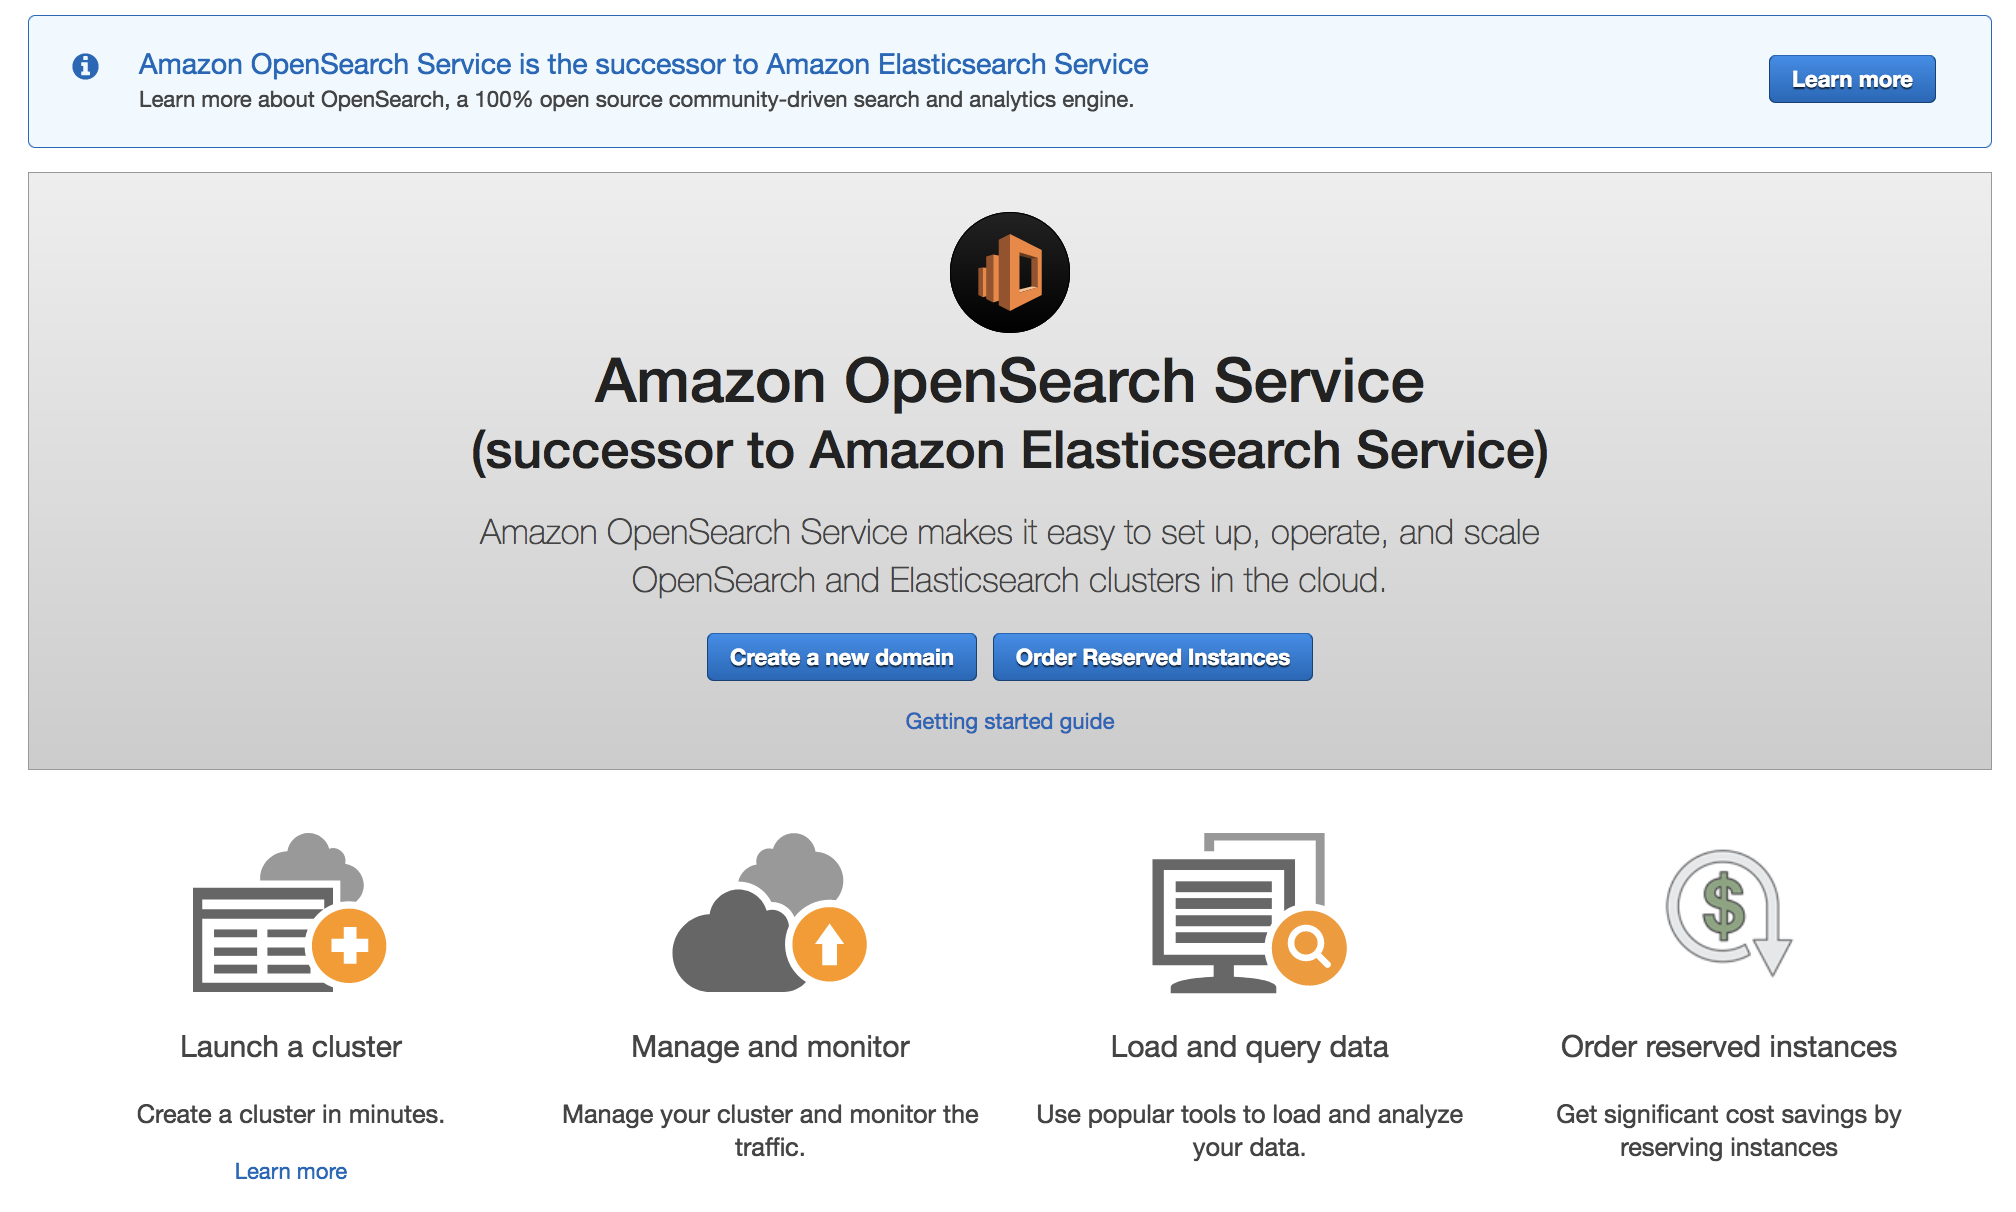 Amazon Elasticsearch Service 更名为 Amazon OpenSearch Service